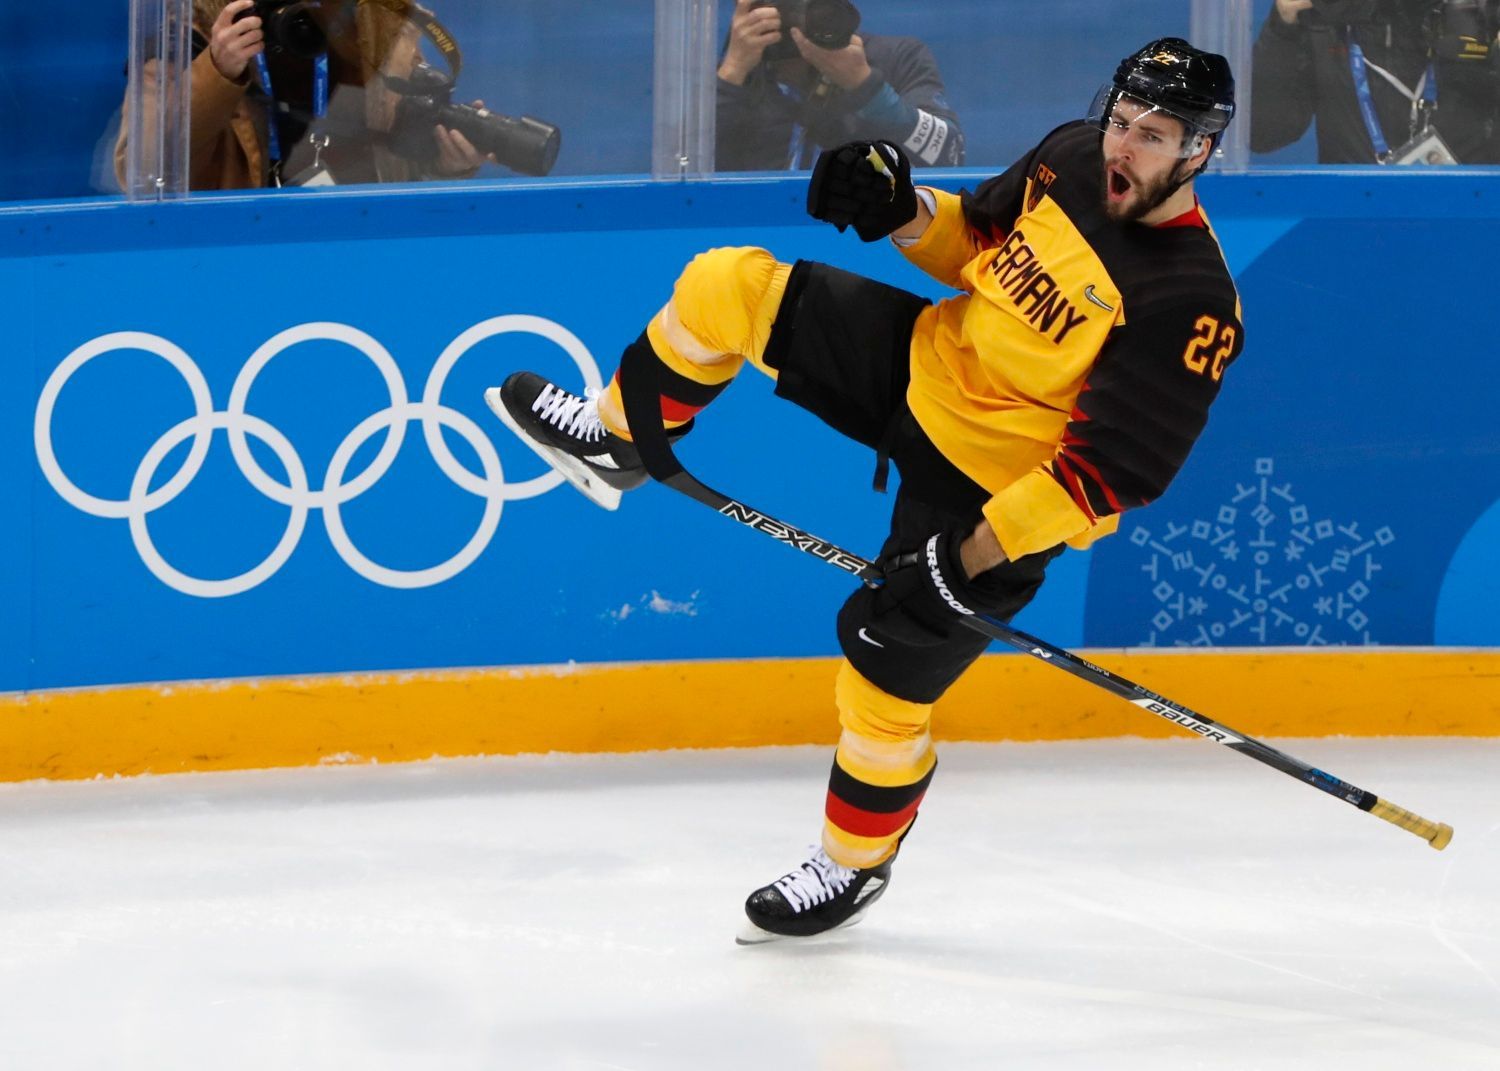 Němec Matthias Plachta slaví gól v semifinále Kanada - Německo na ZOH 2018